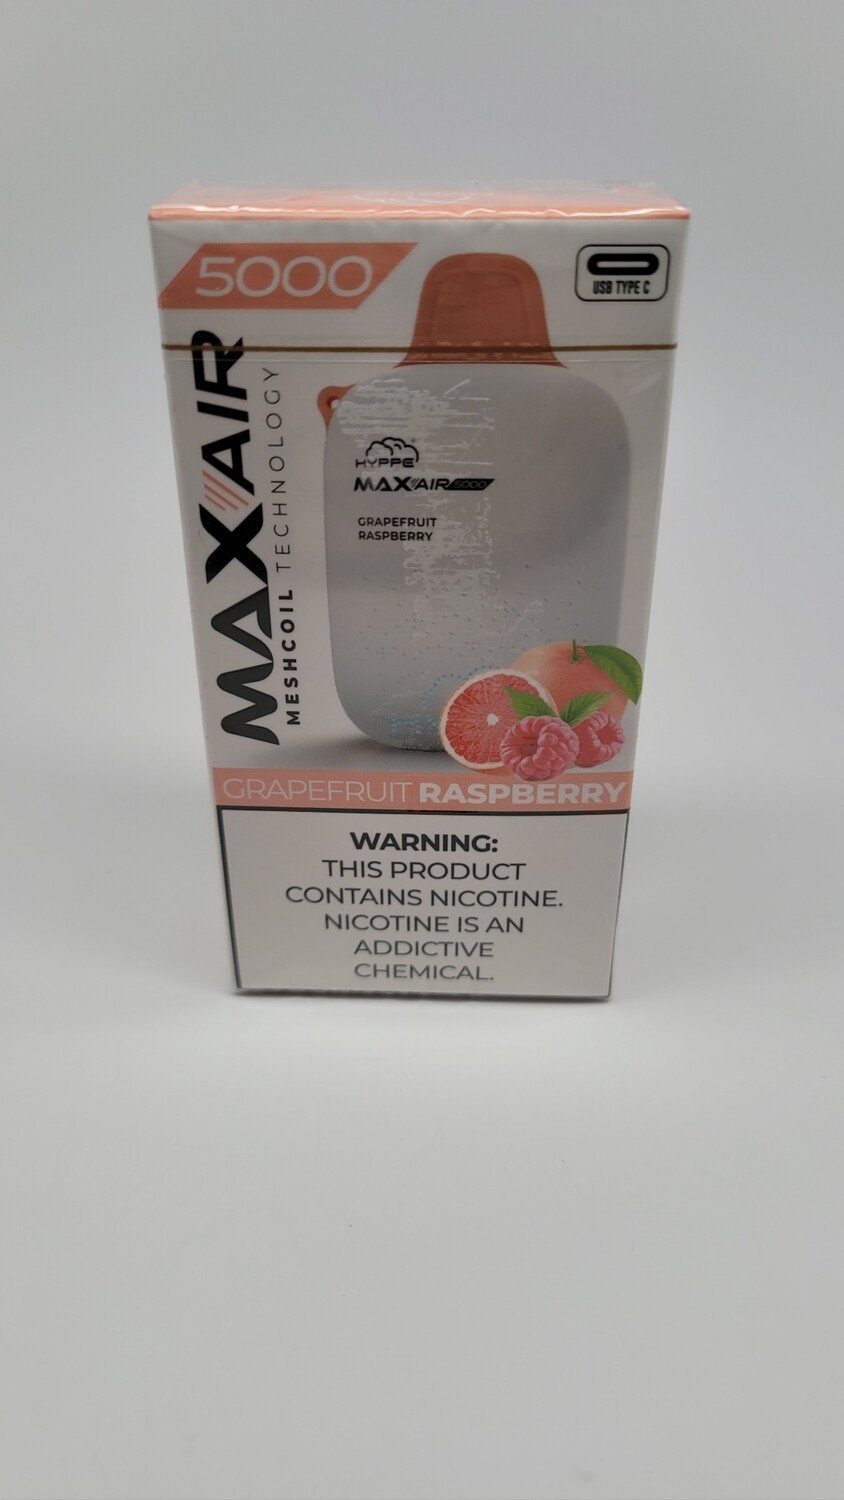 Hyppe Max Air 5000 Grapefruit Raspberry 